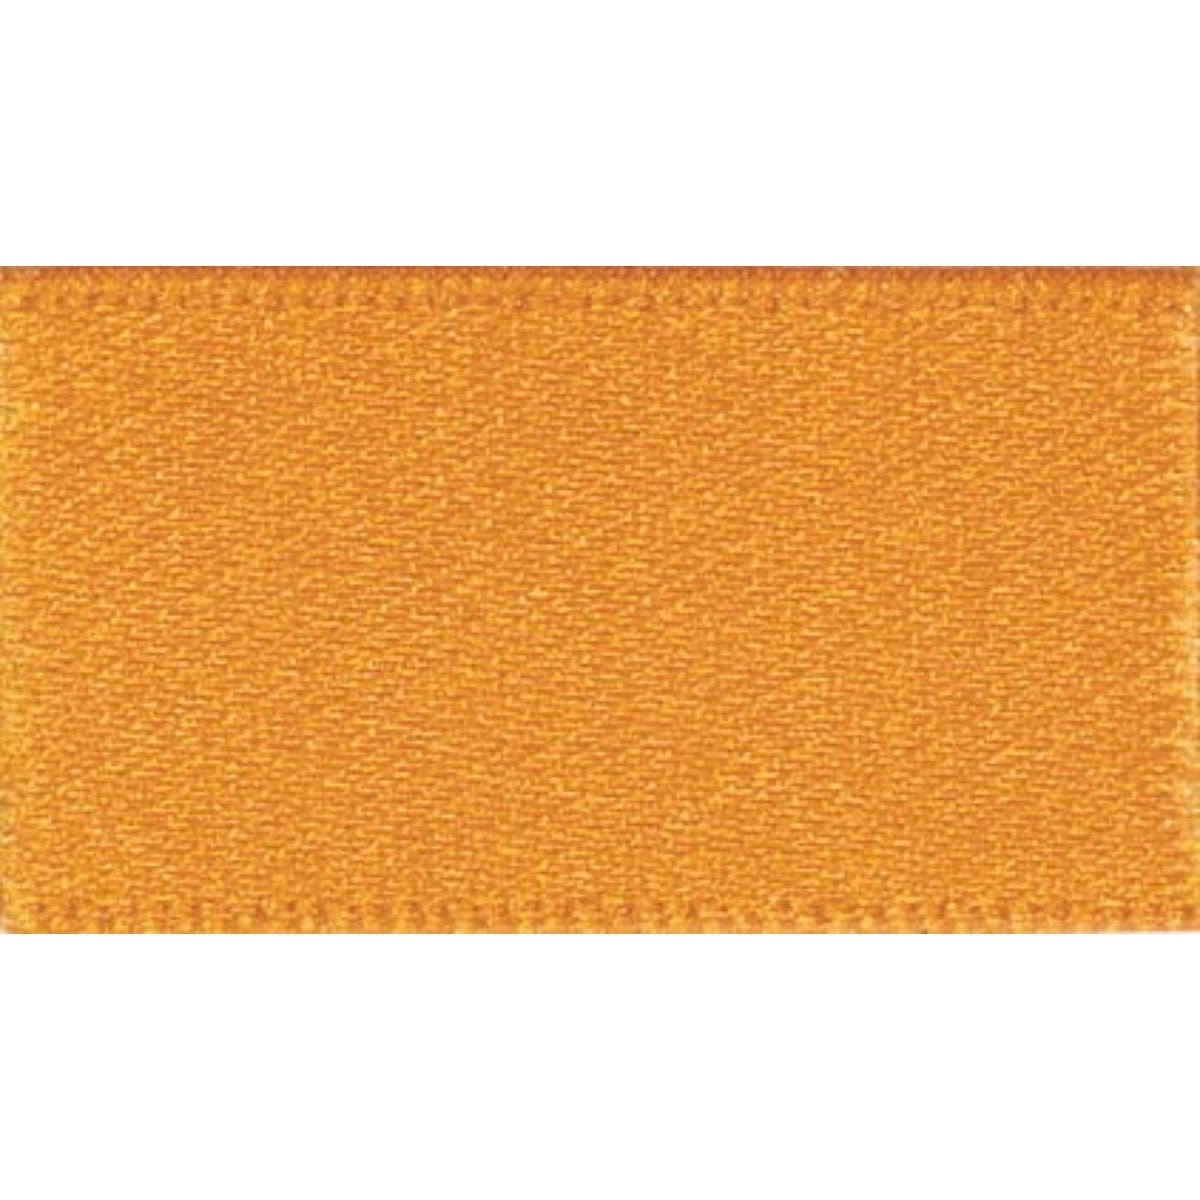 Double Faced Satin Marigold Orange: 35mm wide. Price per metre.